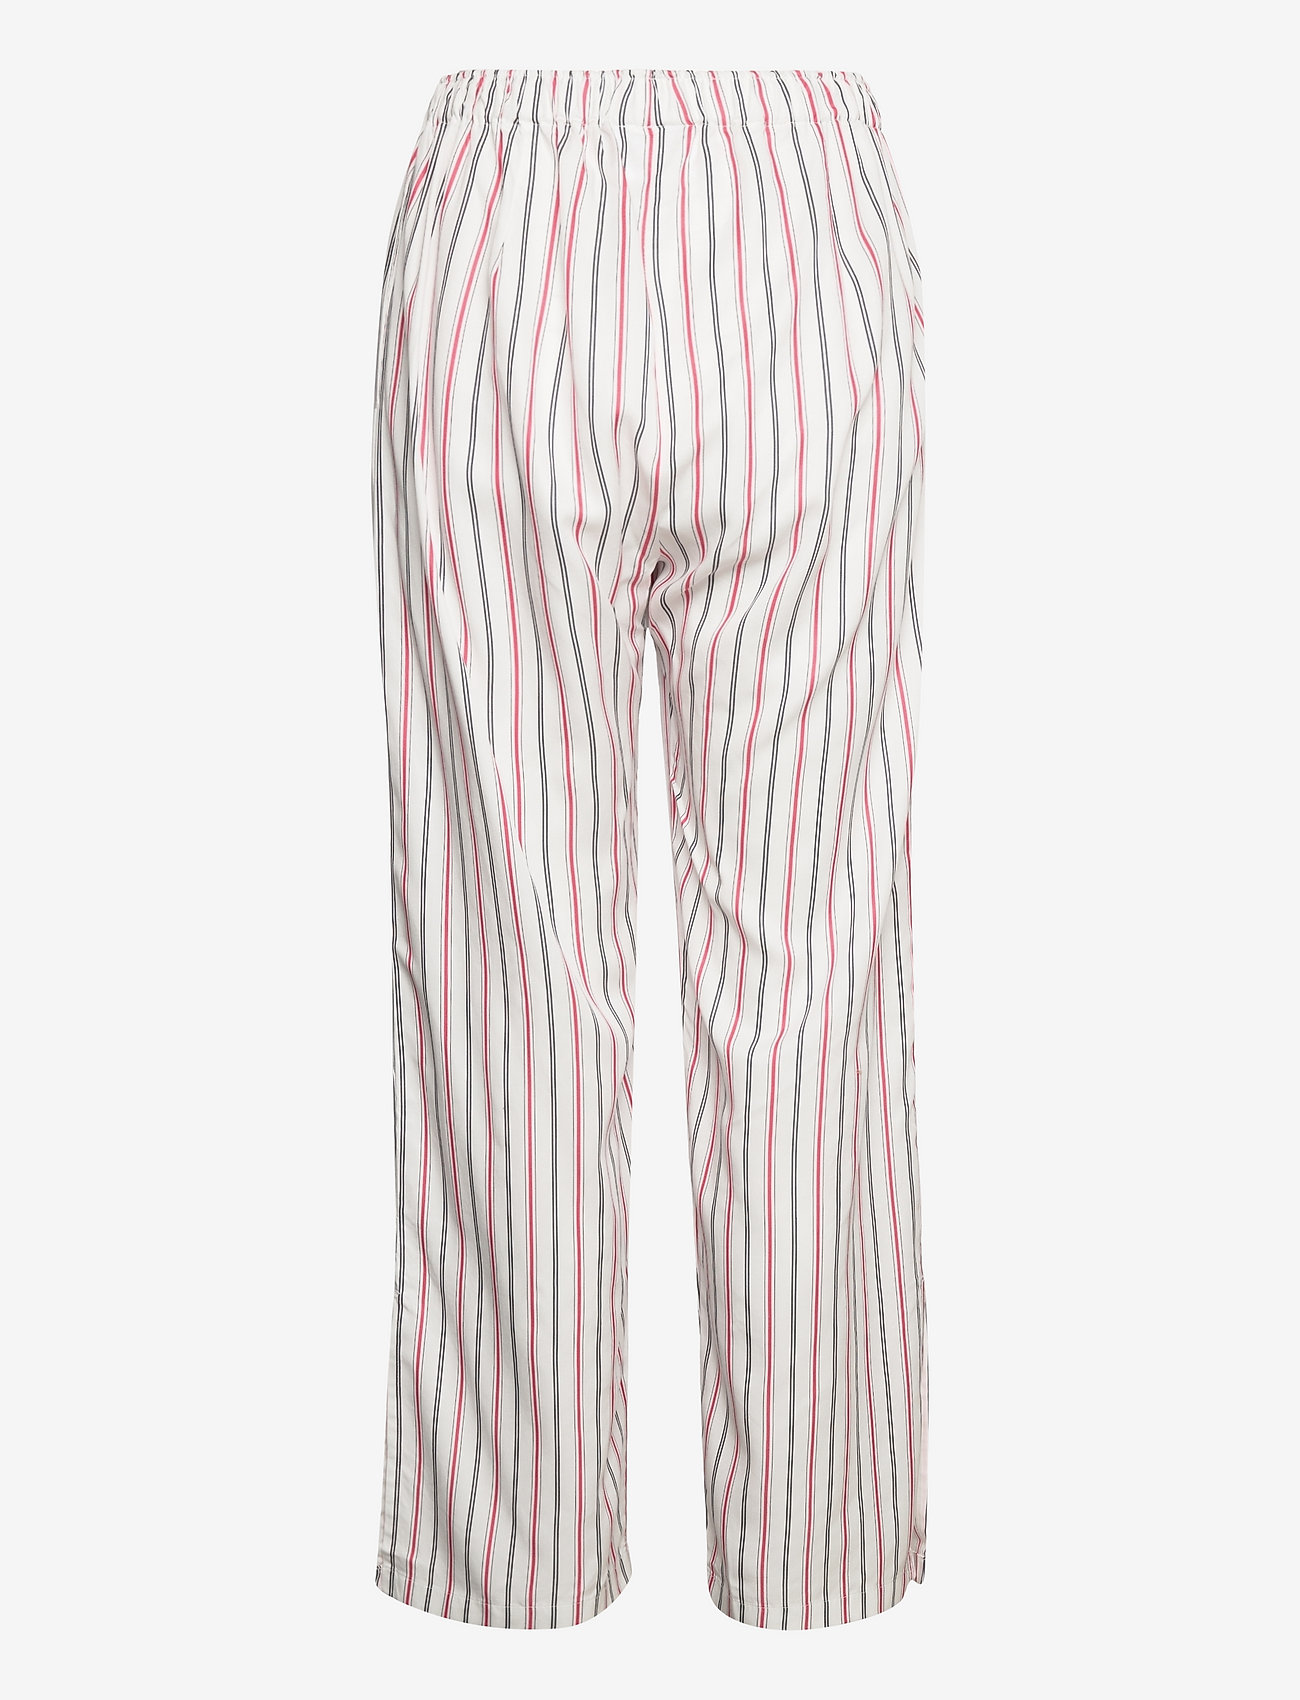 Soulland - Ciara pants - bukser med lige ben - white/red stripes - 1